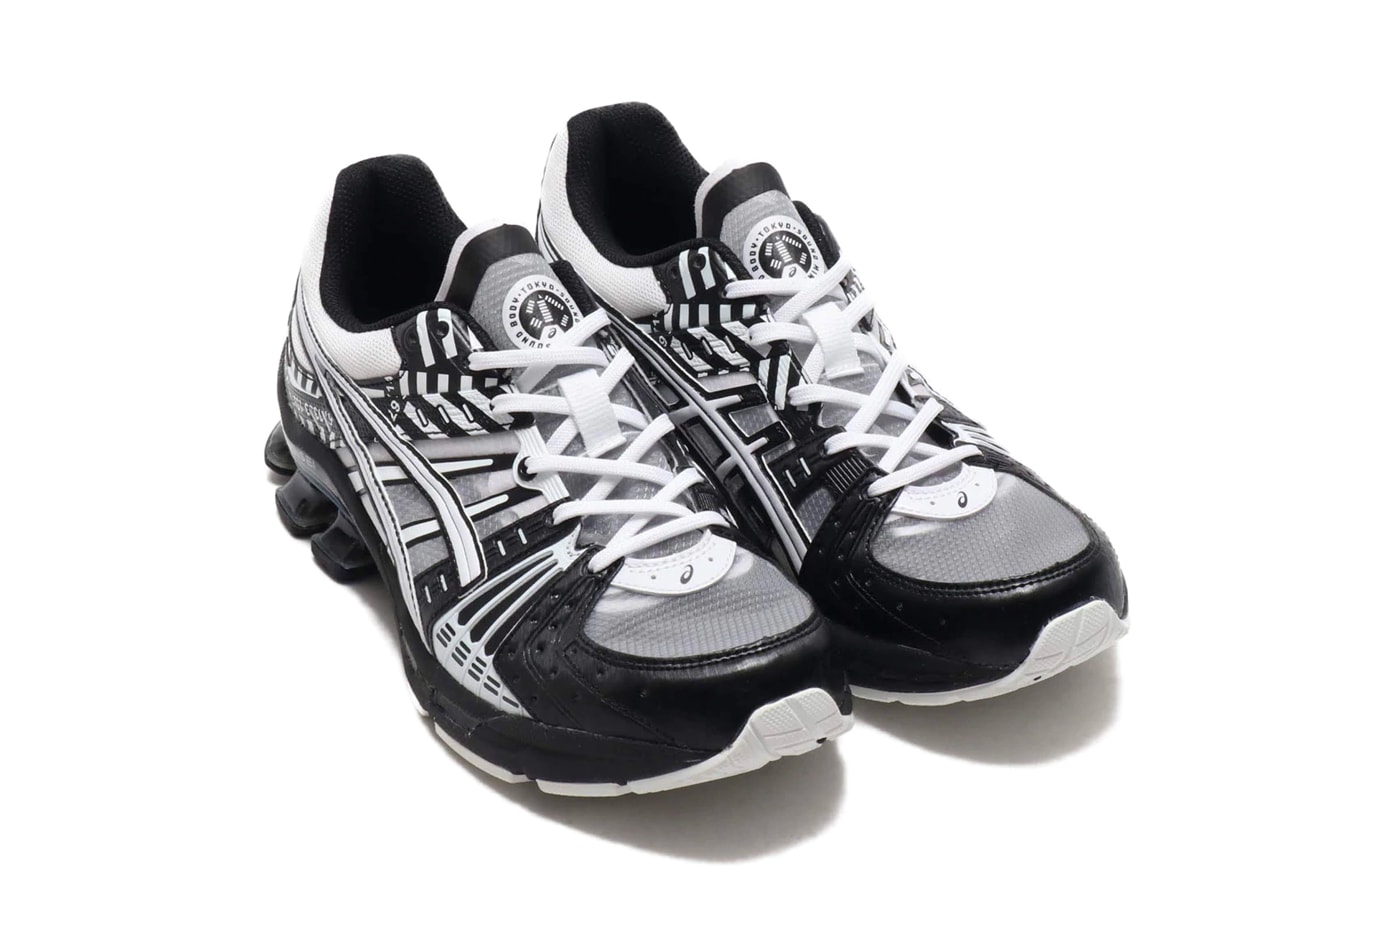 ASICS GEL Kinsei OG White Black footwear shoes sneakers menswear streetwear kicks runners trainers spring 2020 collection 1021a300 100 japanese